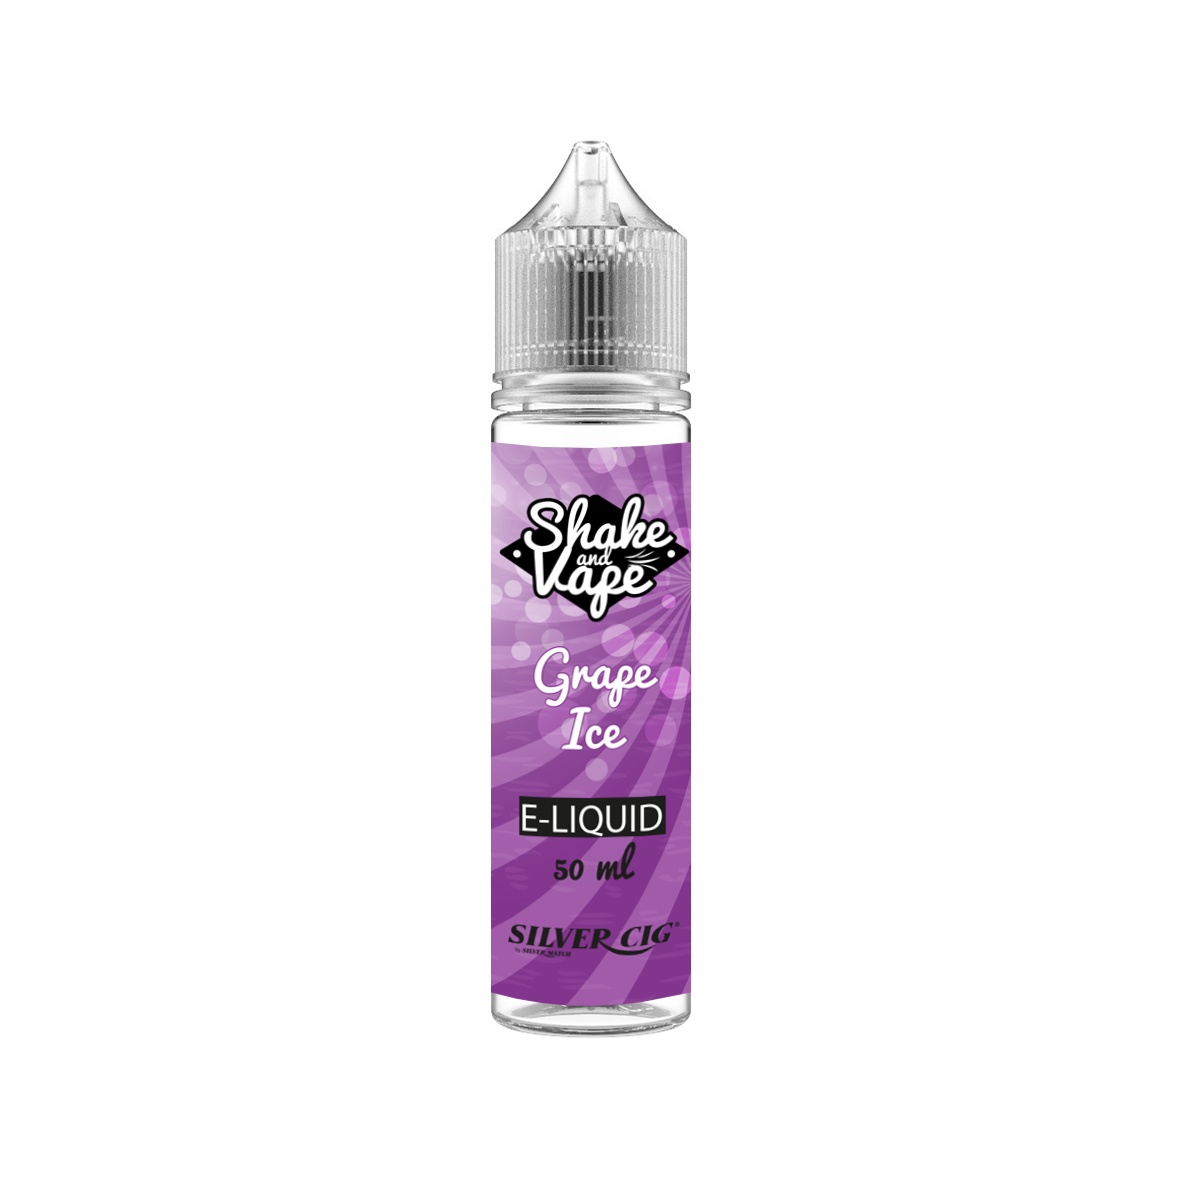 SilverCig Shake&Vape "Grape ICE" 3-p